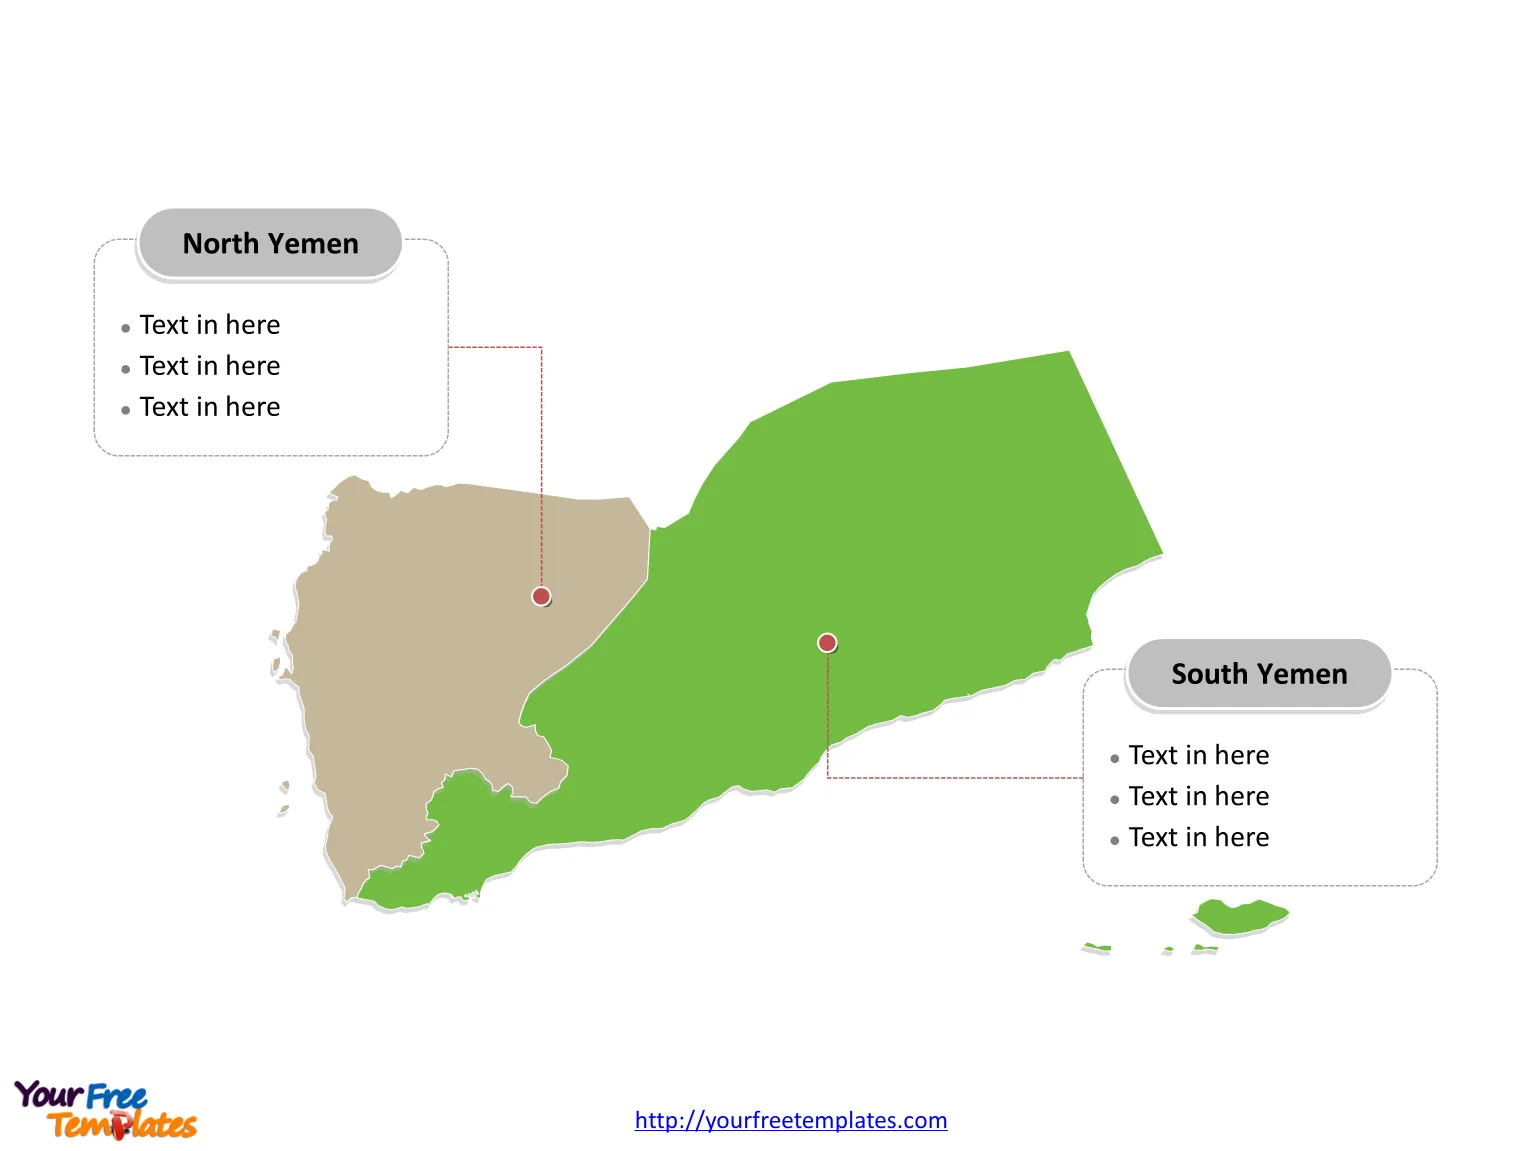 Yemen political map with north Yemen and south Yemen.